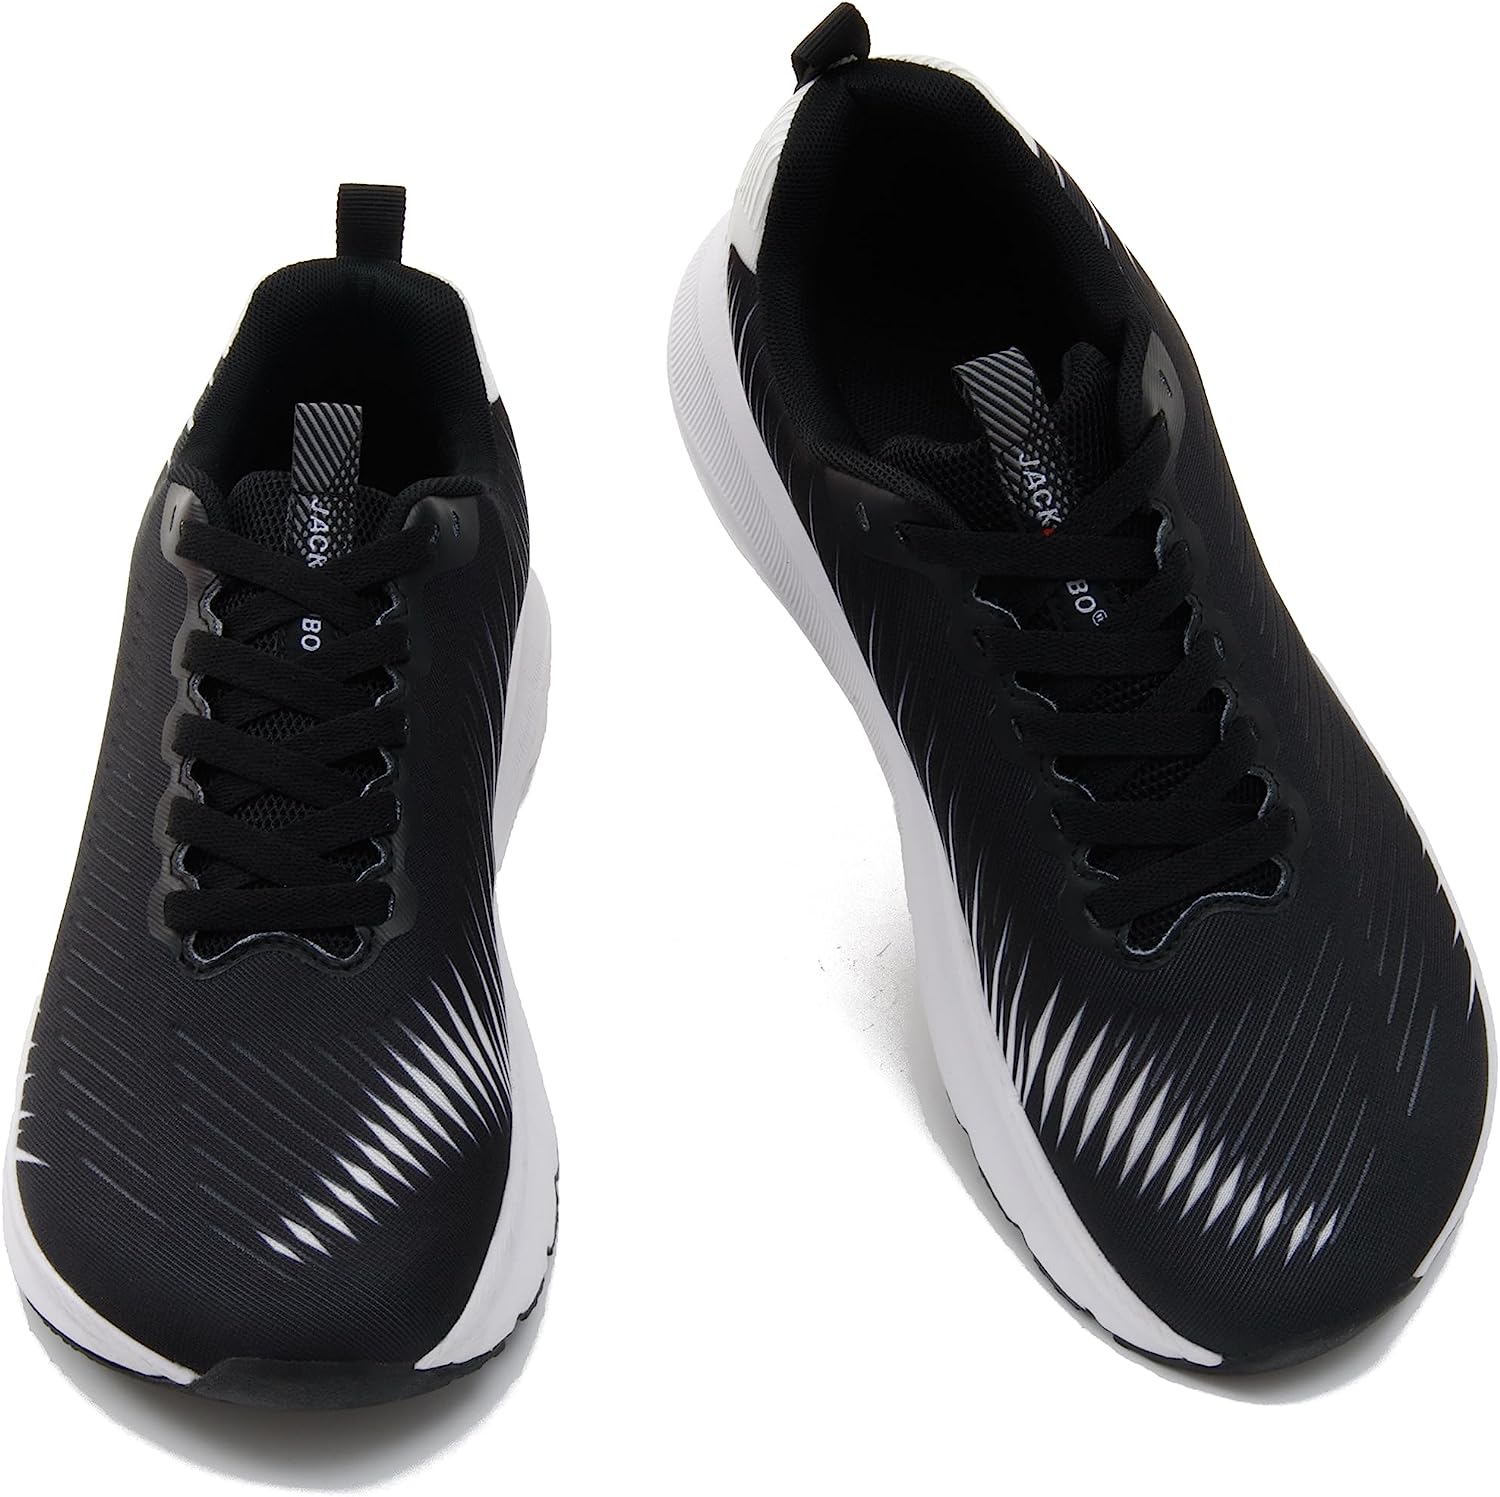 JACKSHIBO Wide Toe Box Shoes for Men Women | Extra [...]